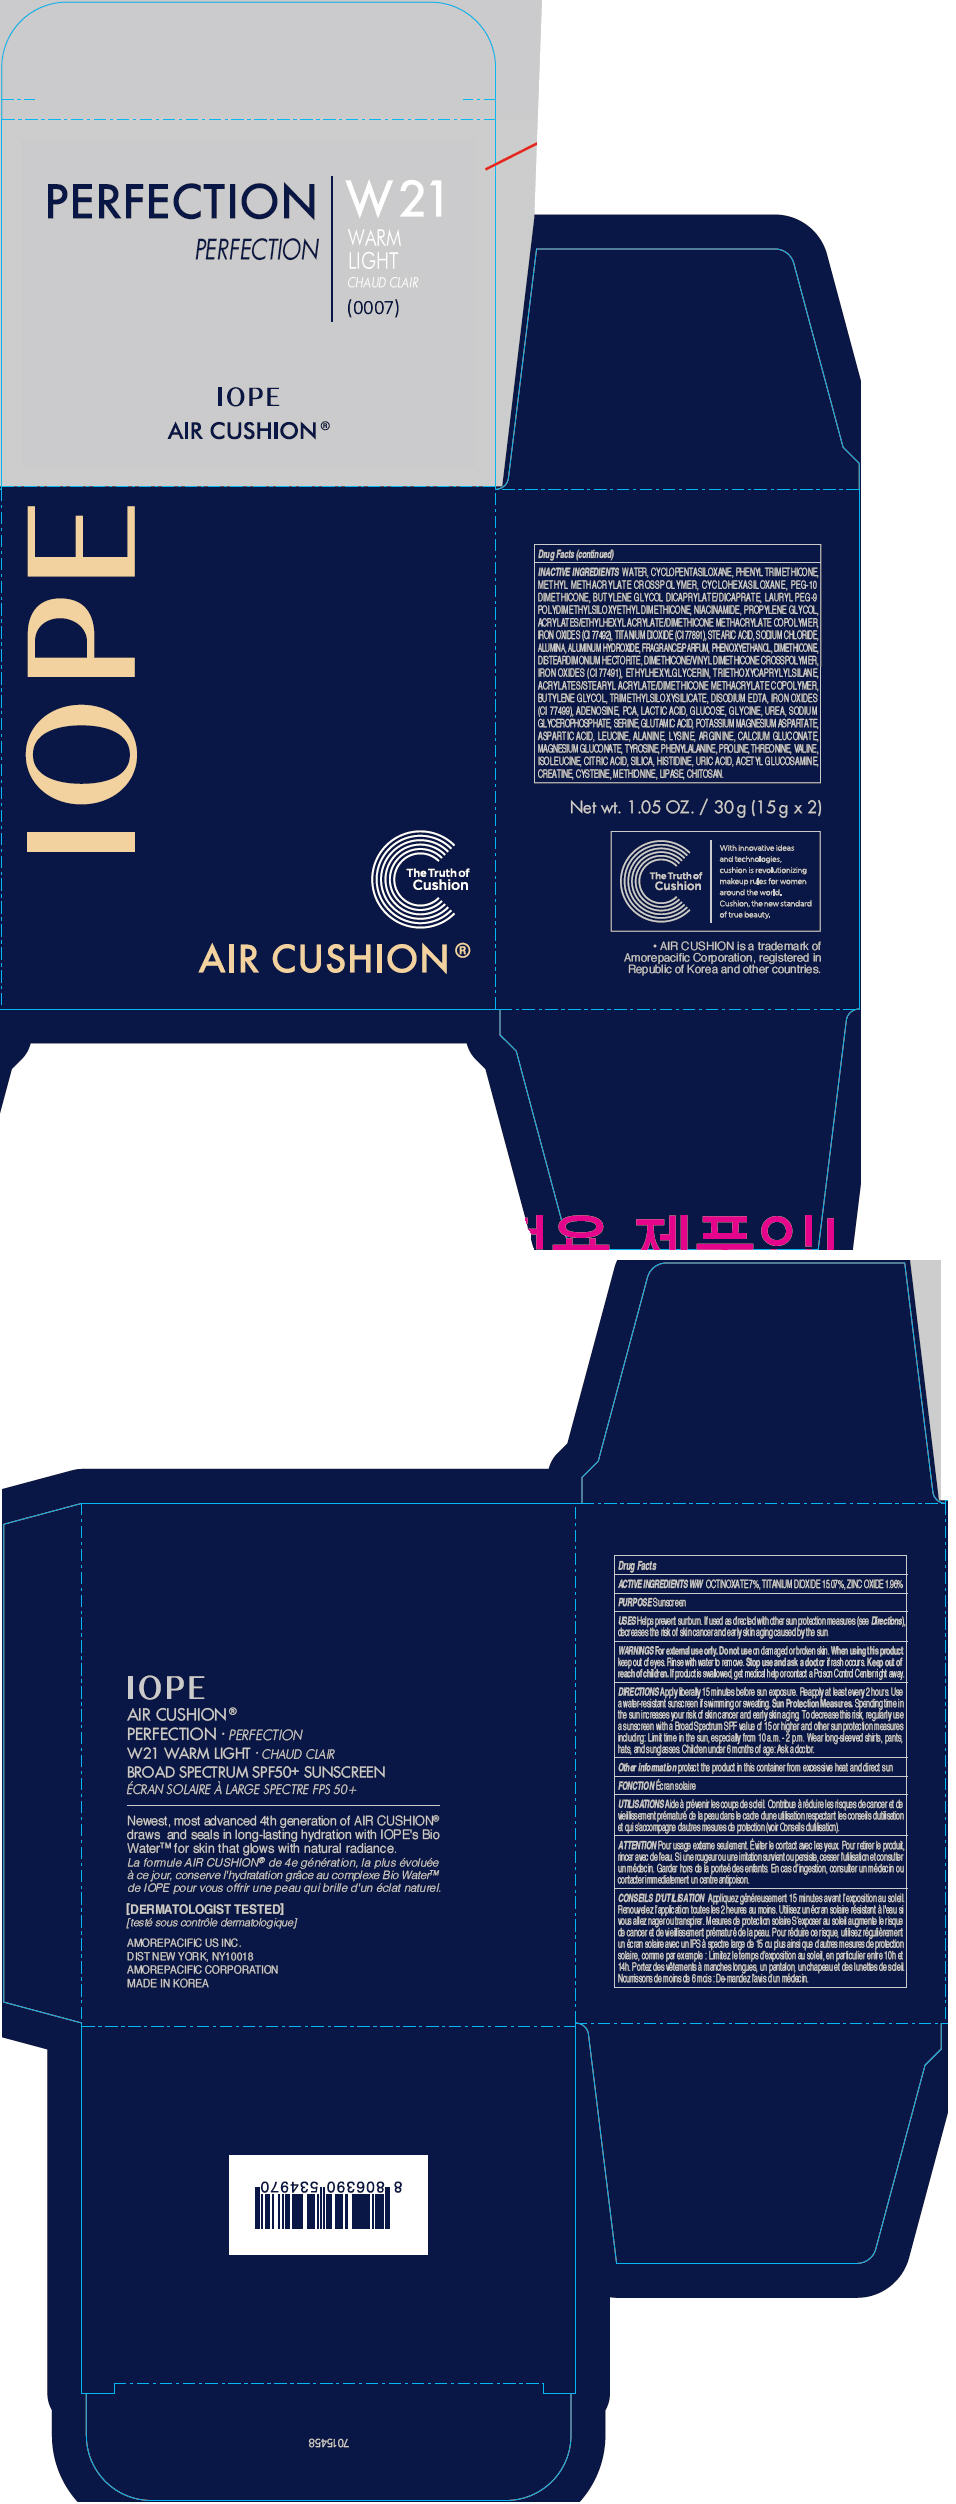 PRINCIPAL DISPLAY PANEL - 30 g Container Carton - W21